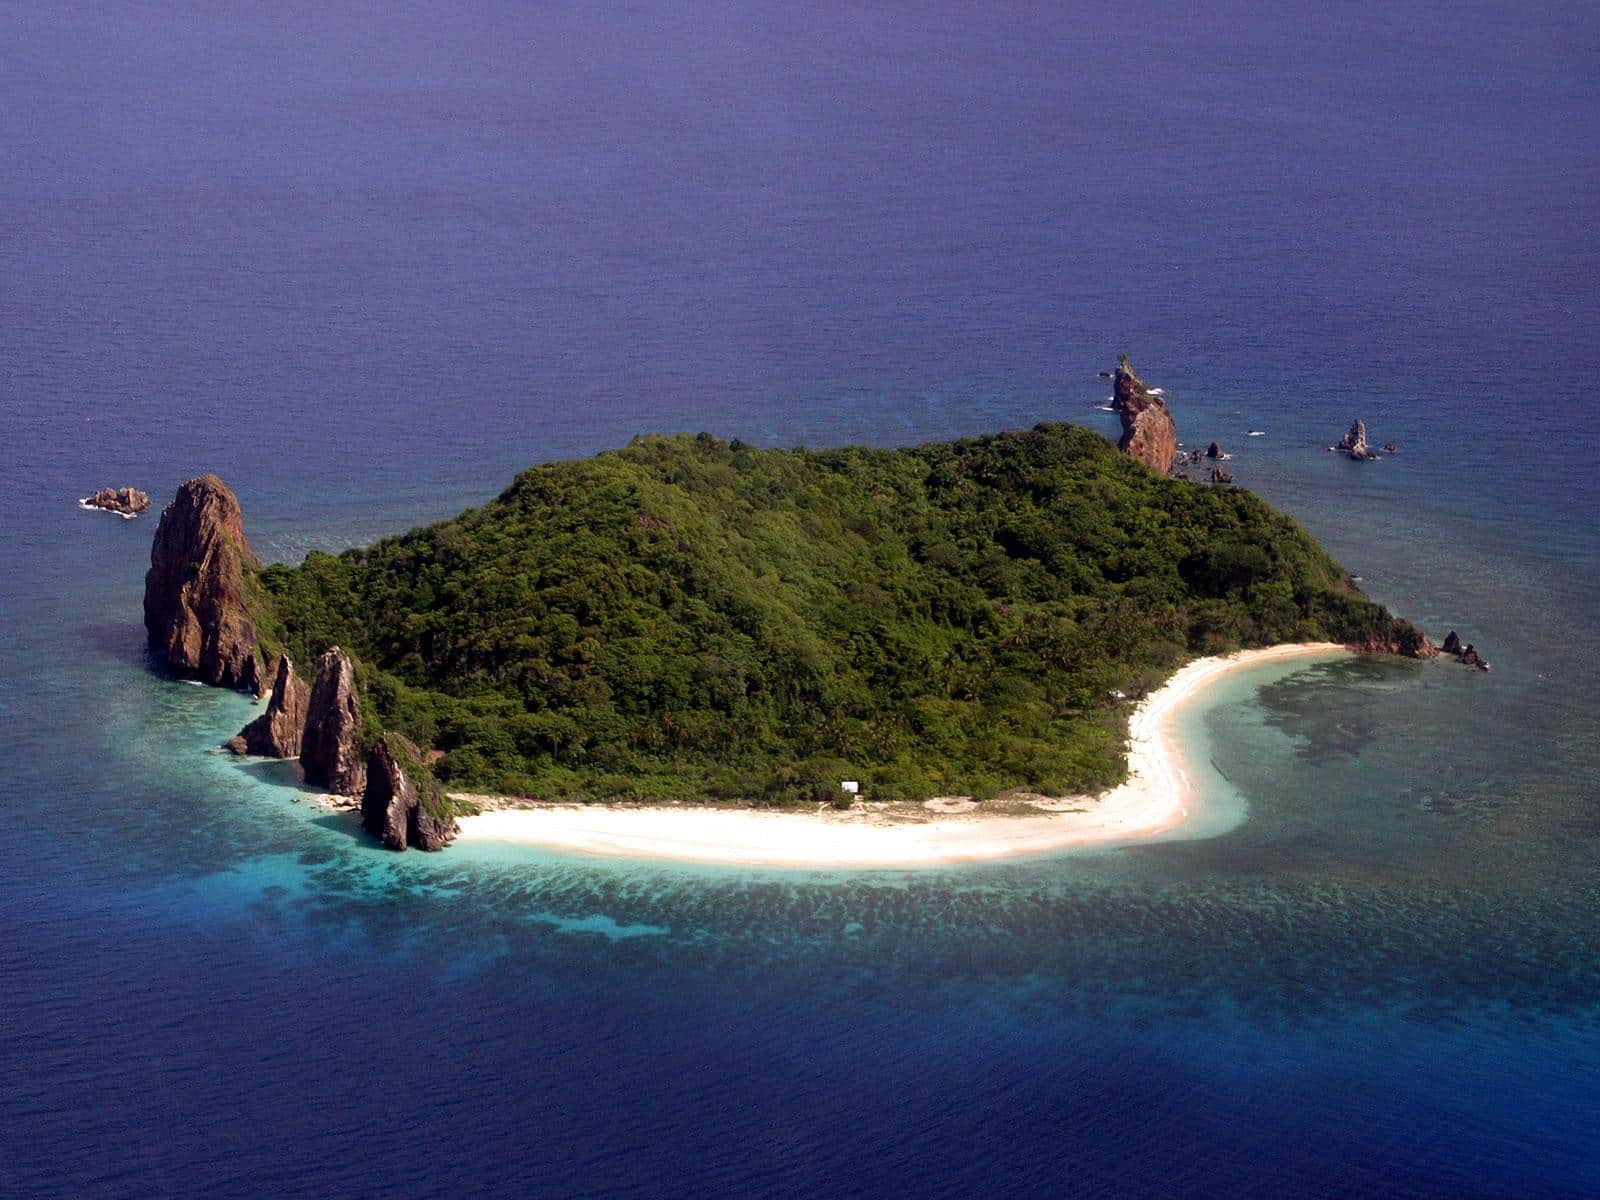 Island for Sale: Dumunpalit, Philippines